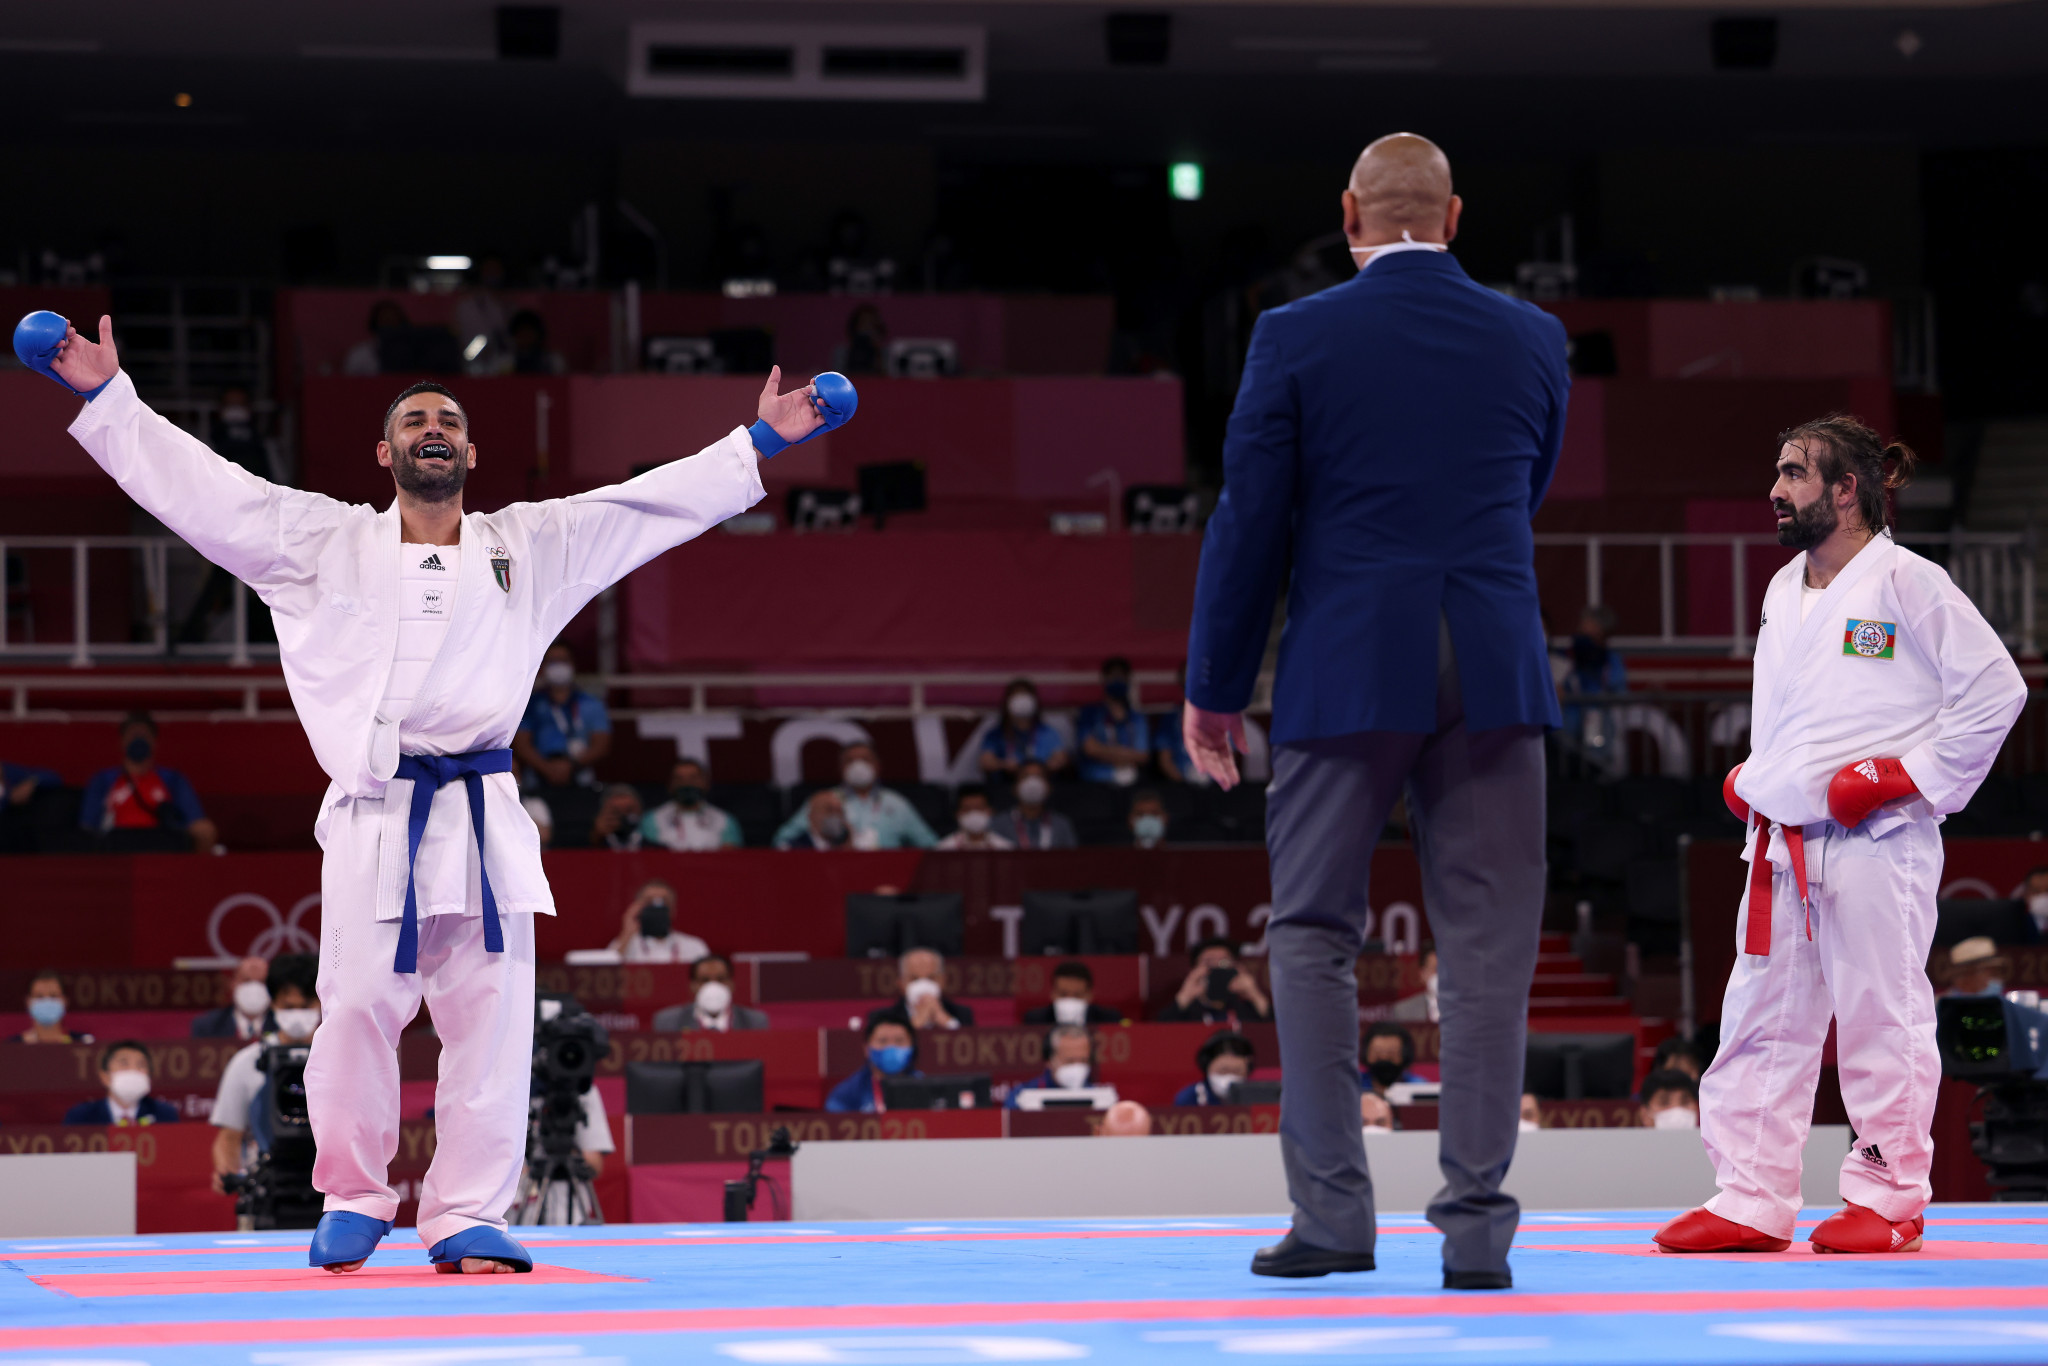 Karateka Luigi Busa celebrates winning a close men's under-75kg kumite final ©Getty Images